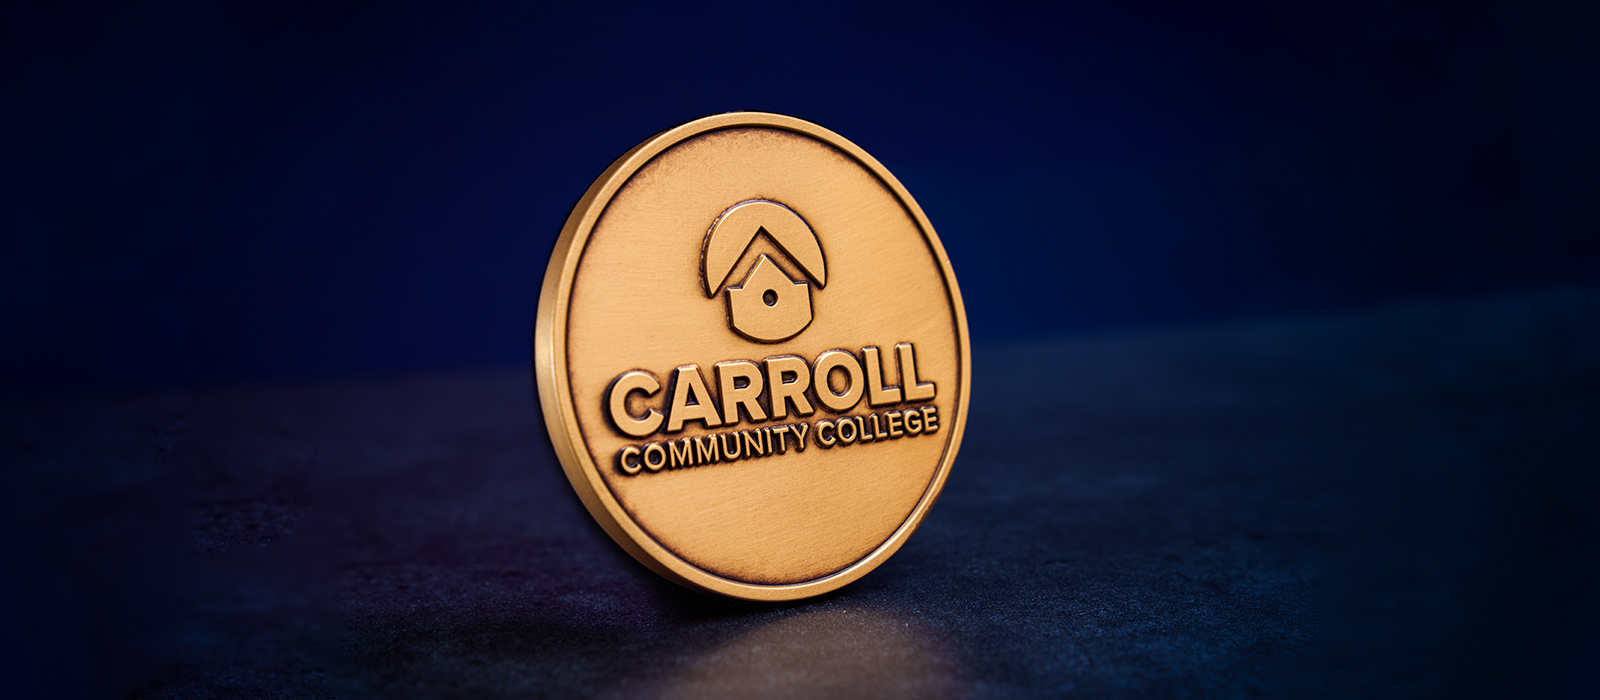 Full Professor Medal Carroll Community College